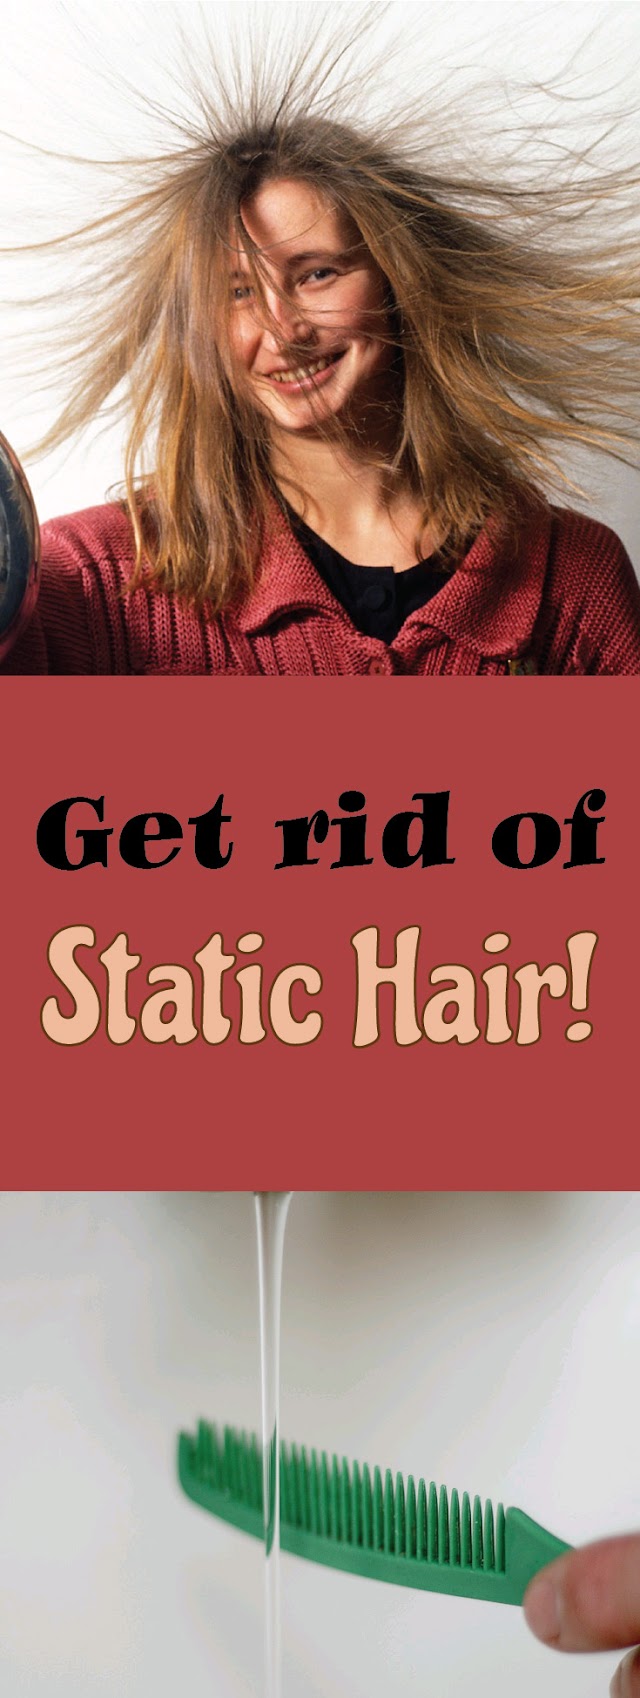 Get rid of static hair